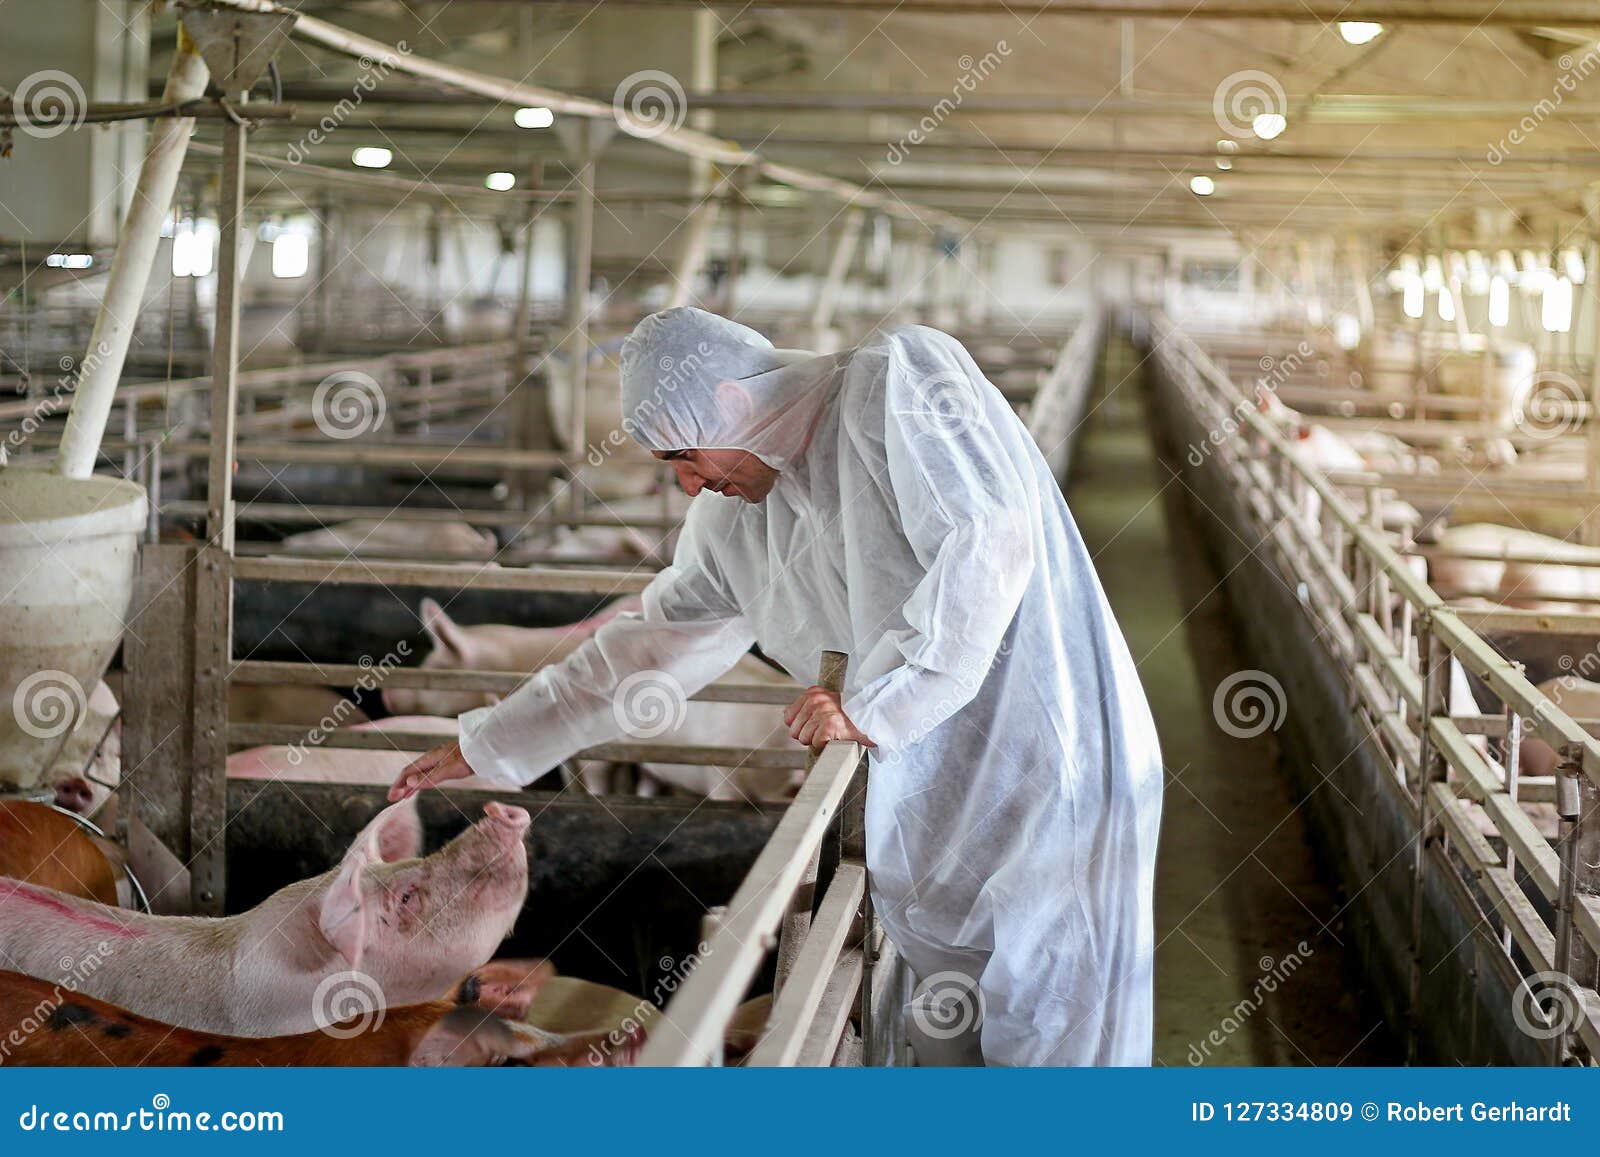 veterinarian examining pigs at a pig farm